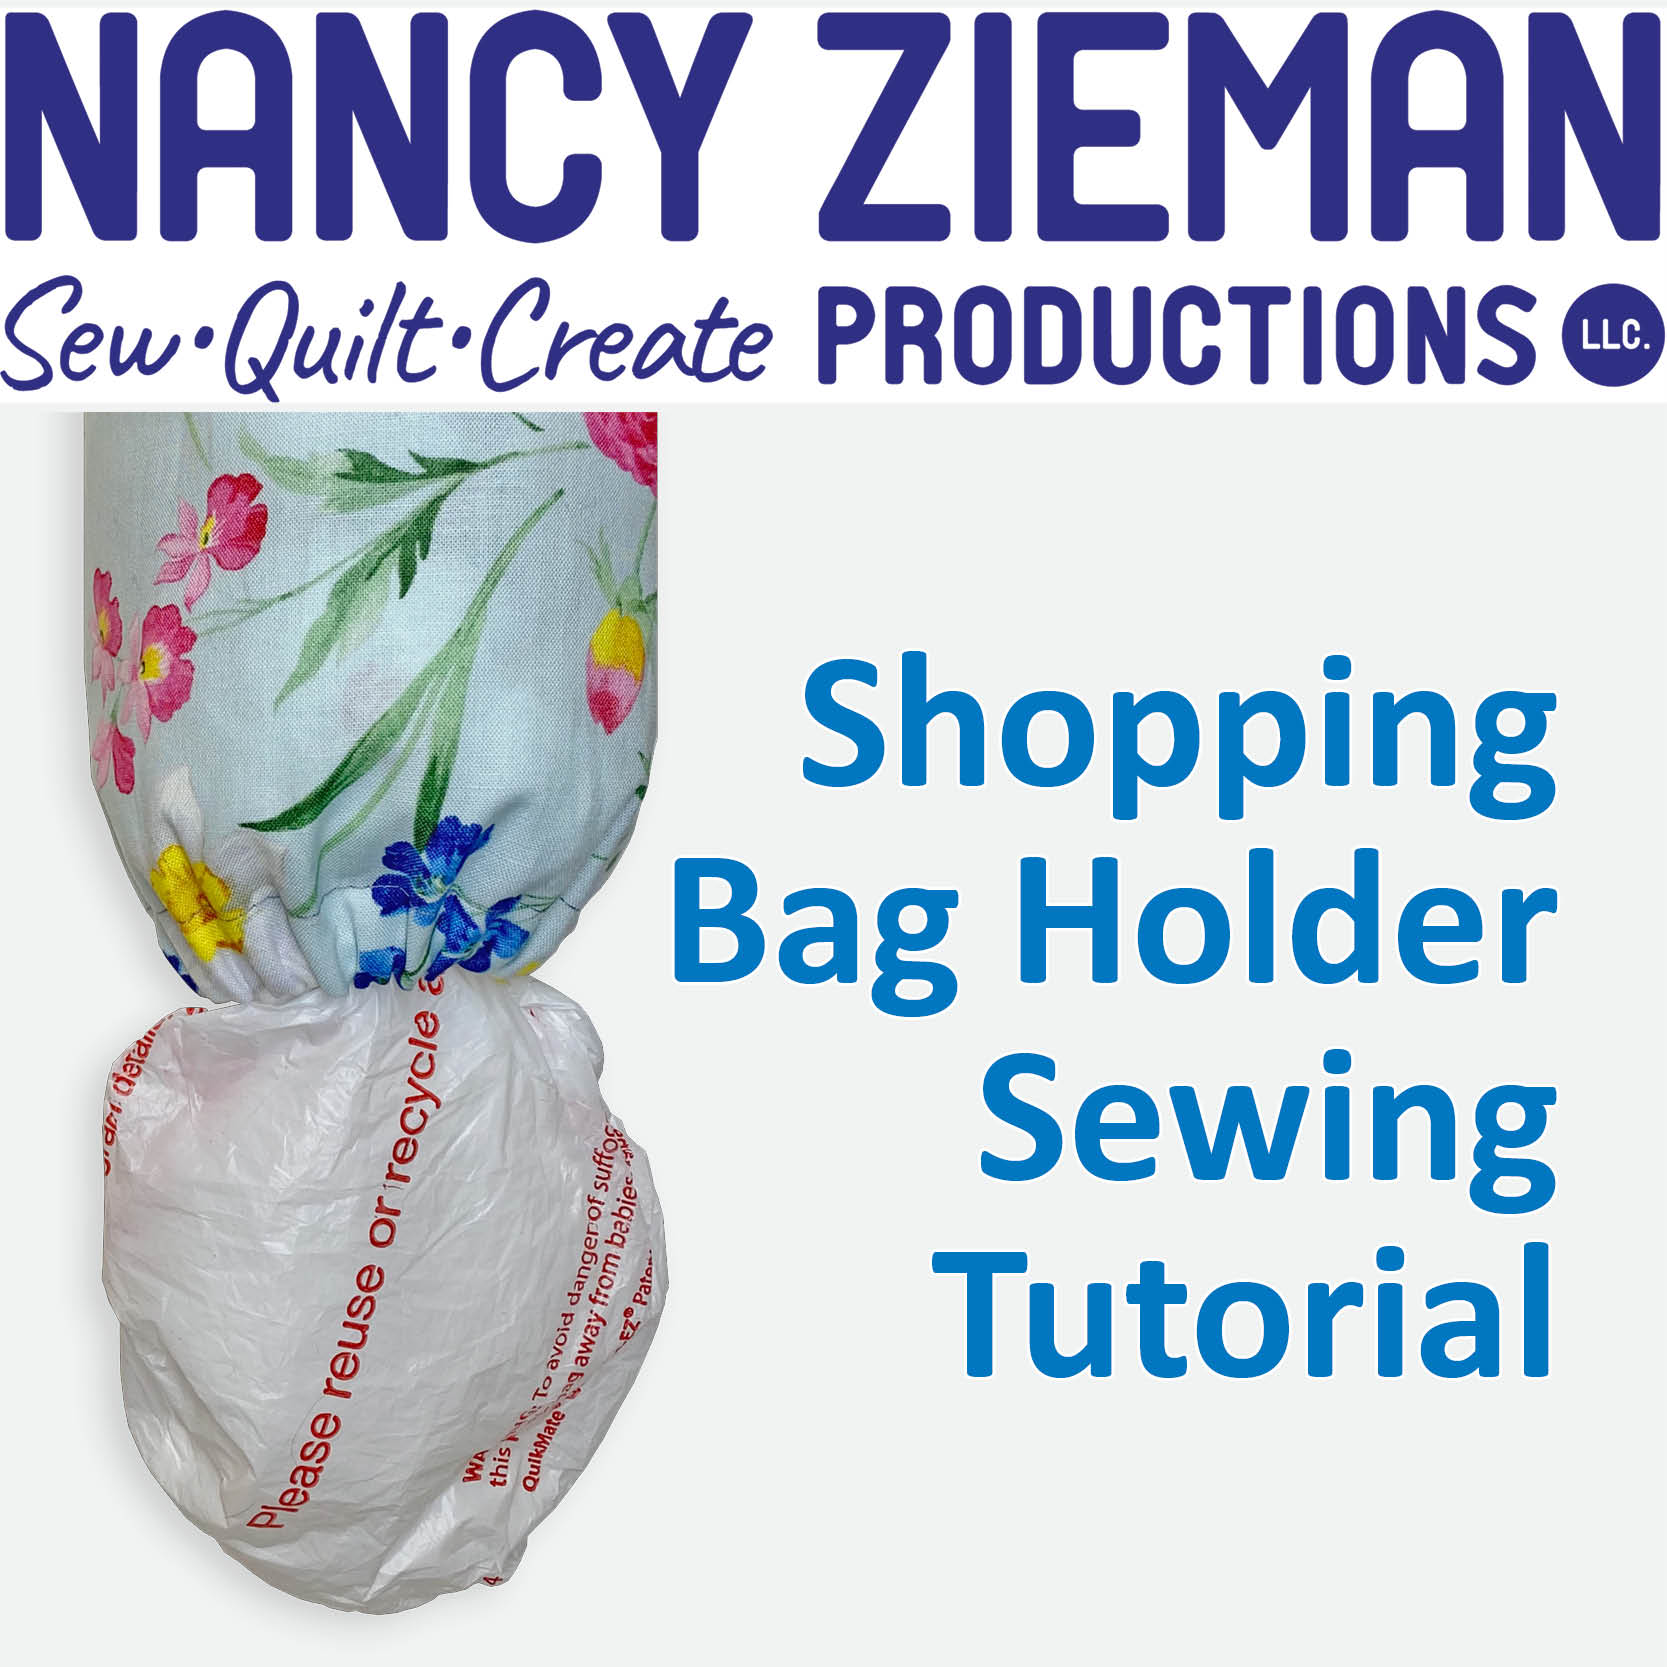 NEW! Shopping Bag Holder Sewing Tutorial at the Nancy Zieman Productions Blog